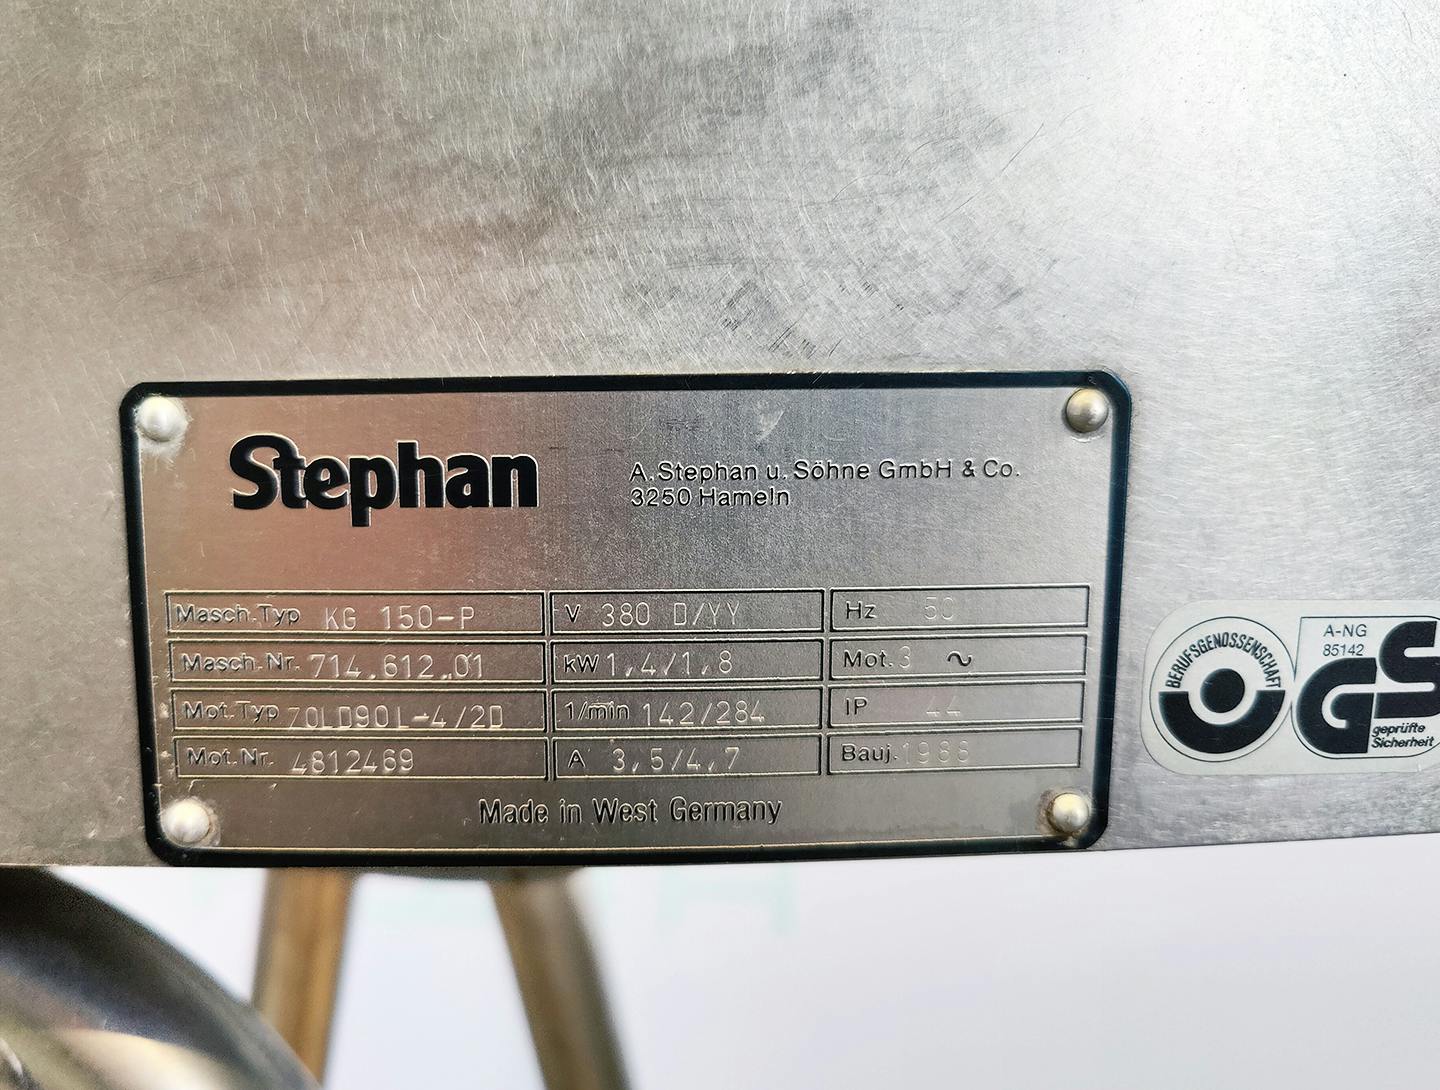 Stephan 150-P - Doorwrijfzeef - image 7